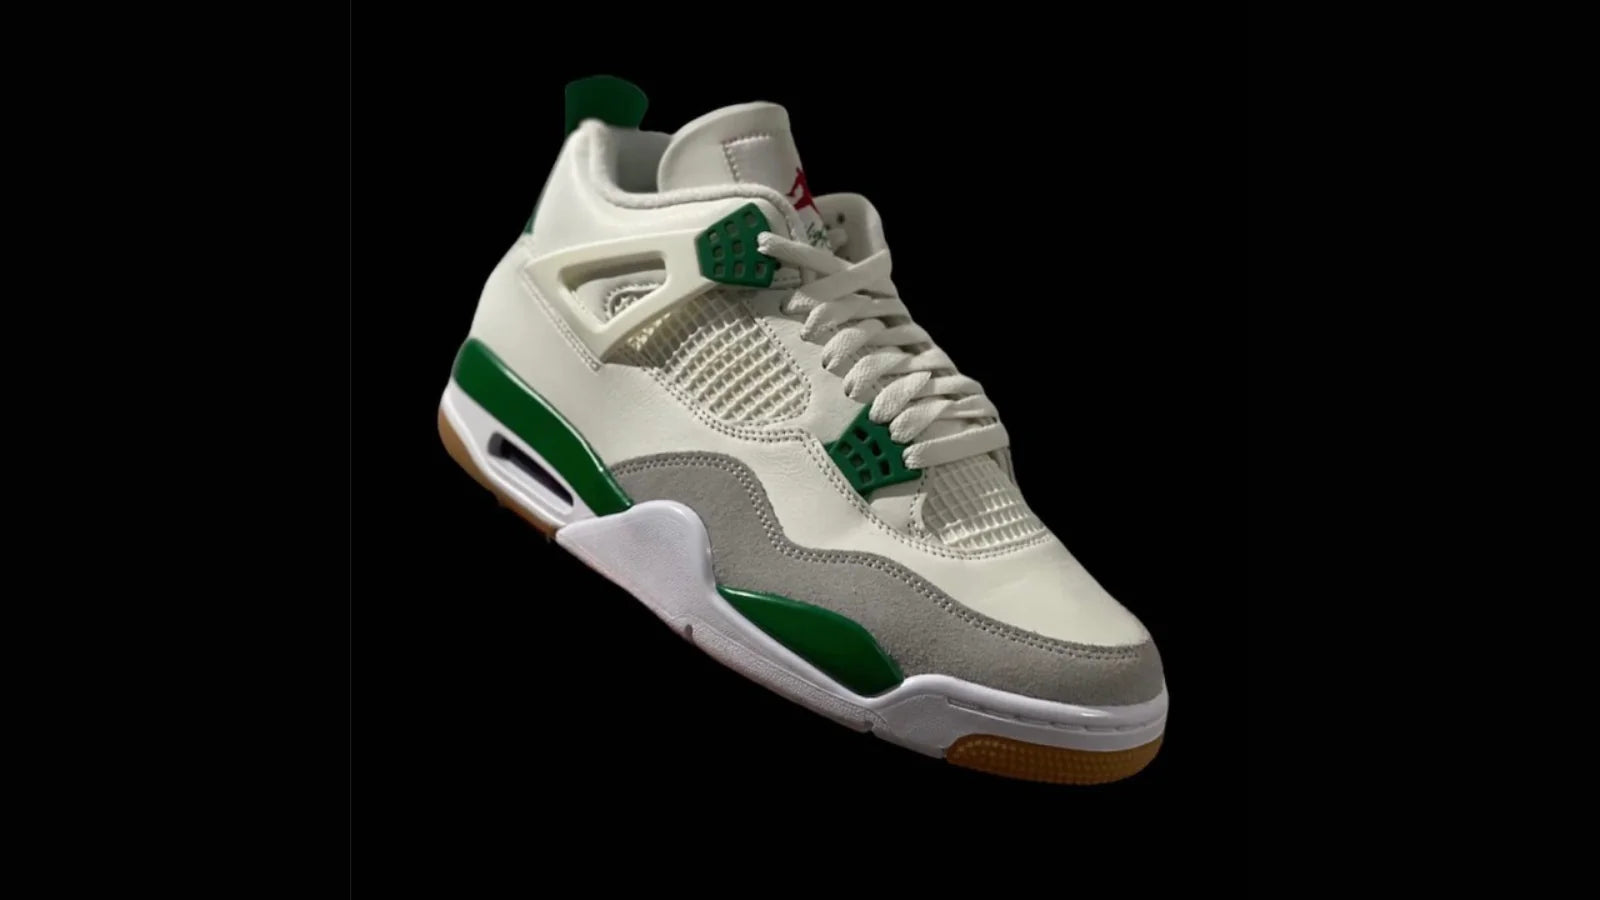 Jordan 4 X Nike Sb - confirmed